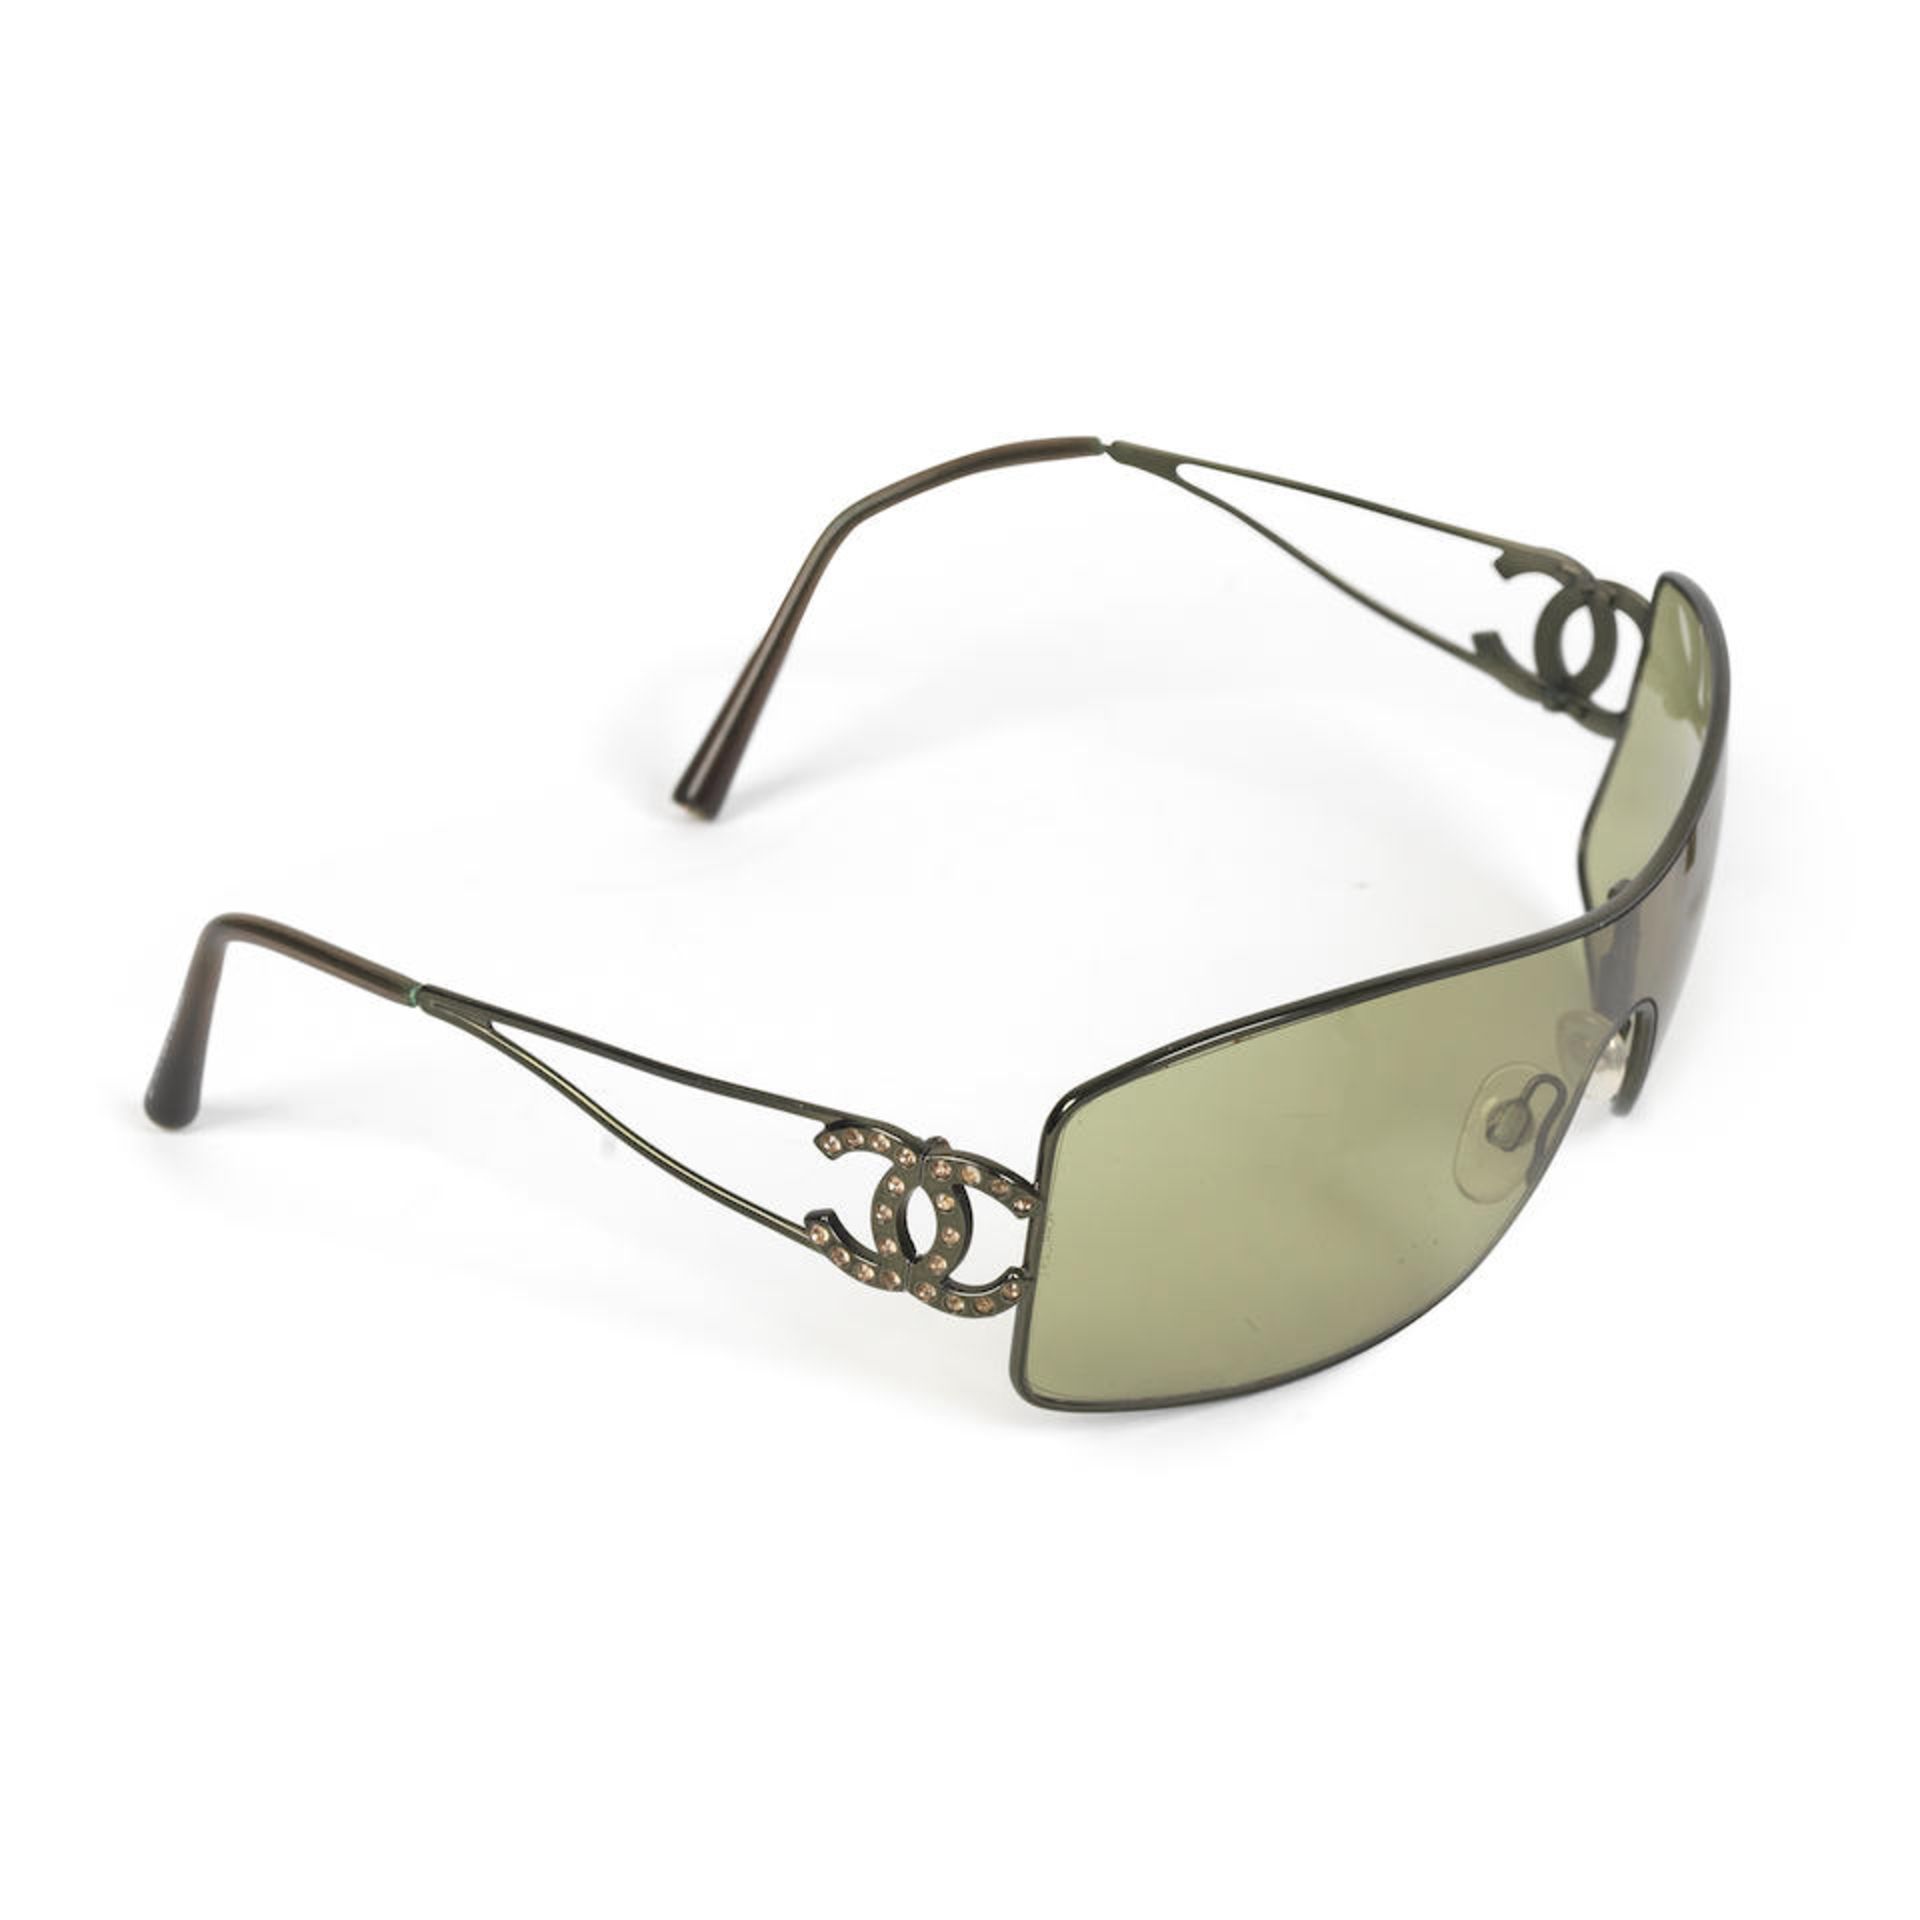 Karl Lagerfeld for Chanel: a Pair of Green CC Visor Sunglasses 2000s - Bild 2 aus 2